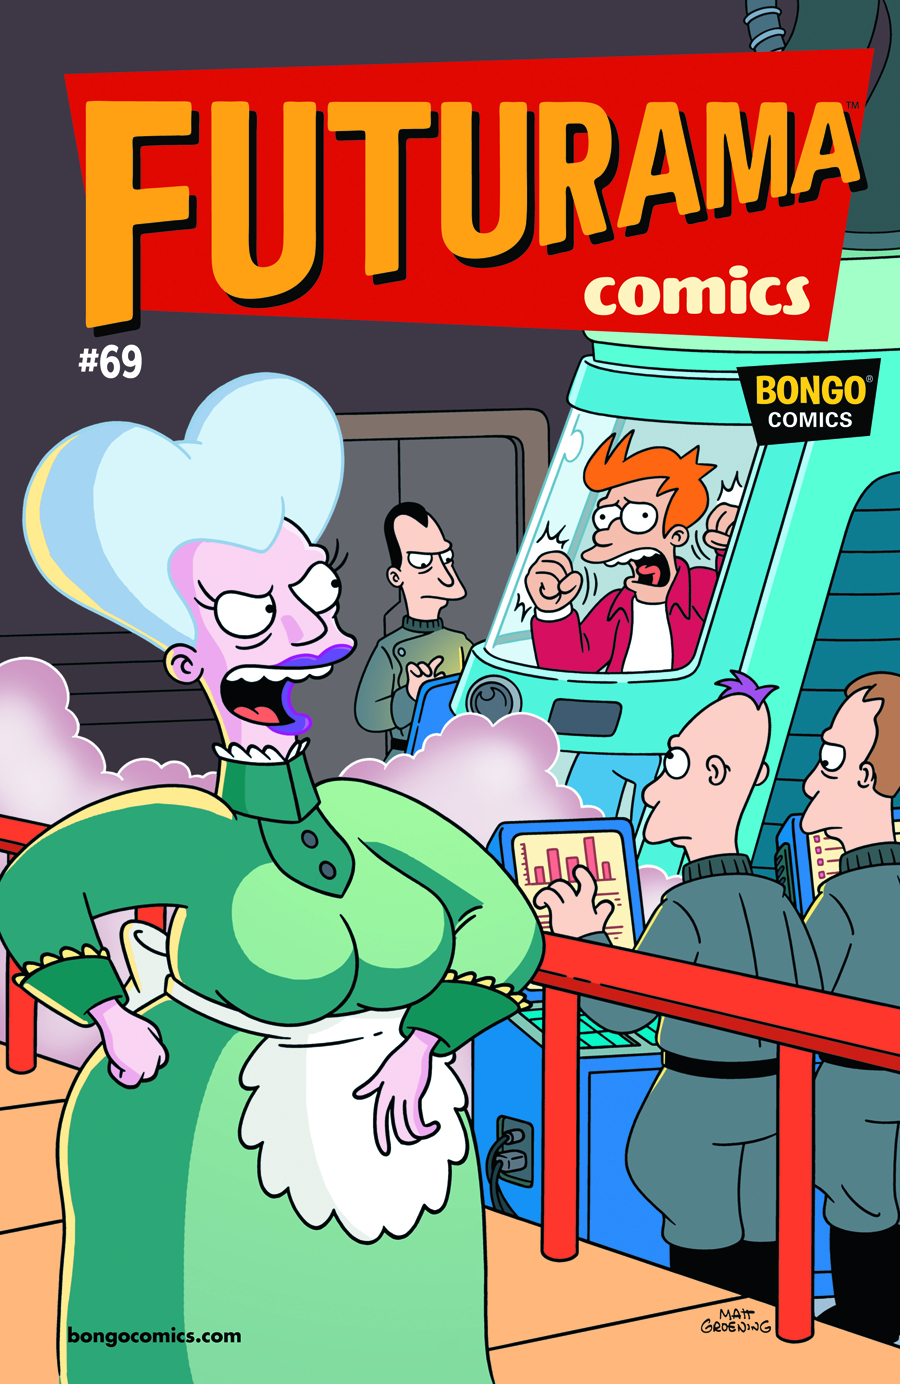 FUTURAMA COMICS #69